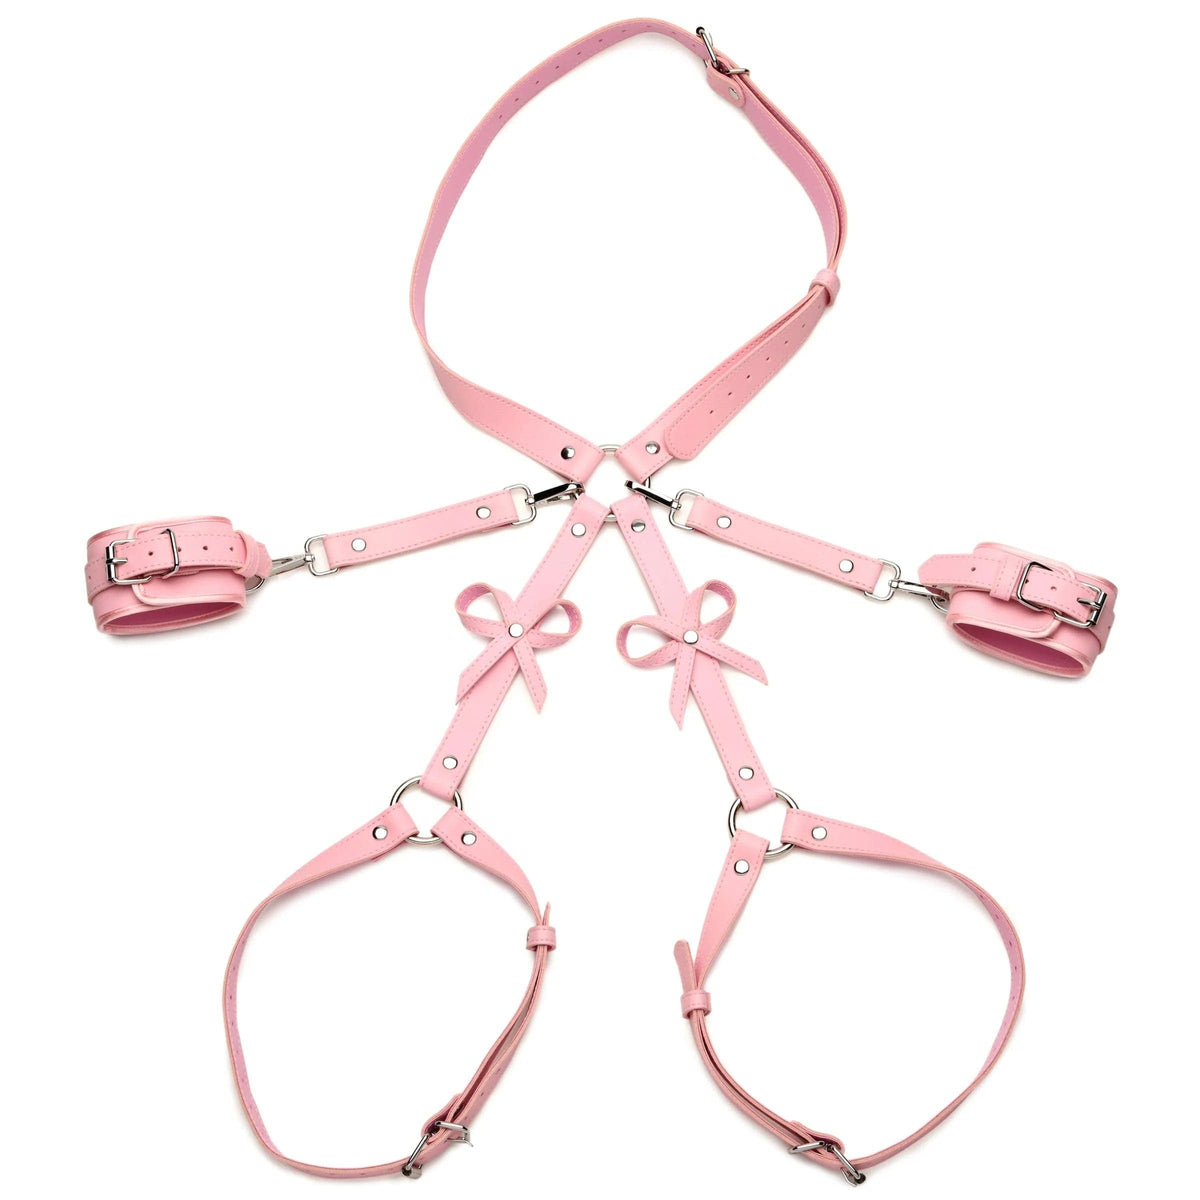 bondage harness with bows medium large pink